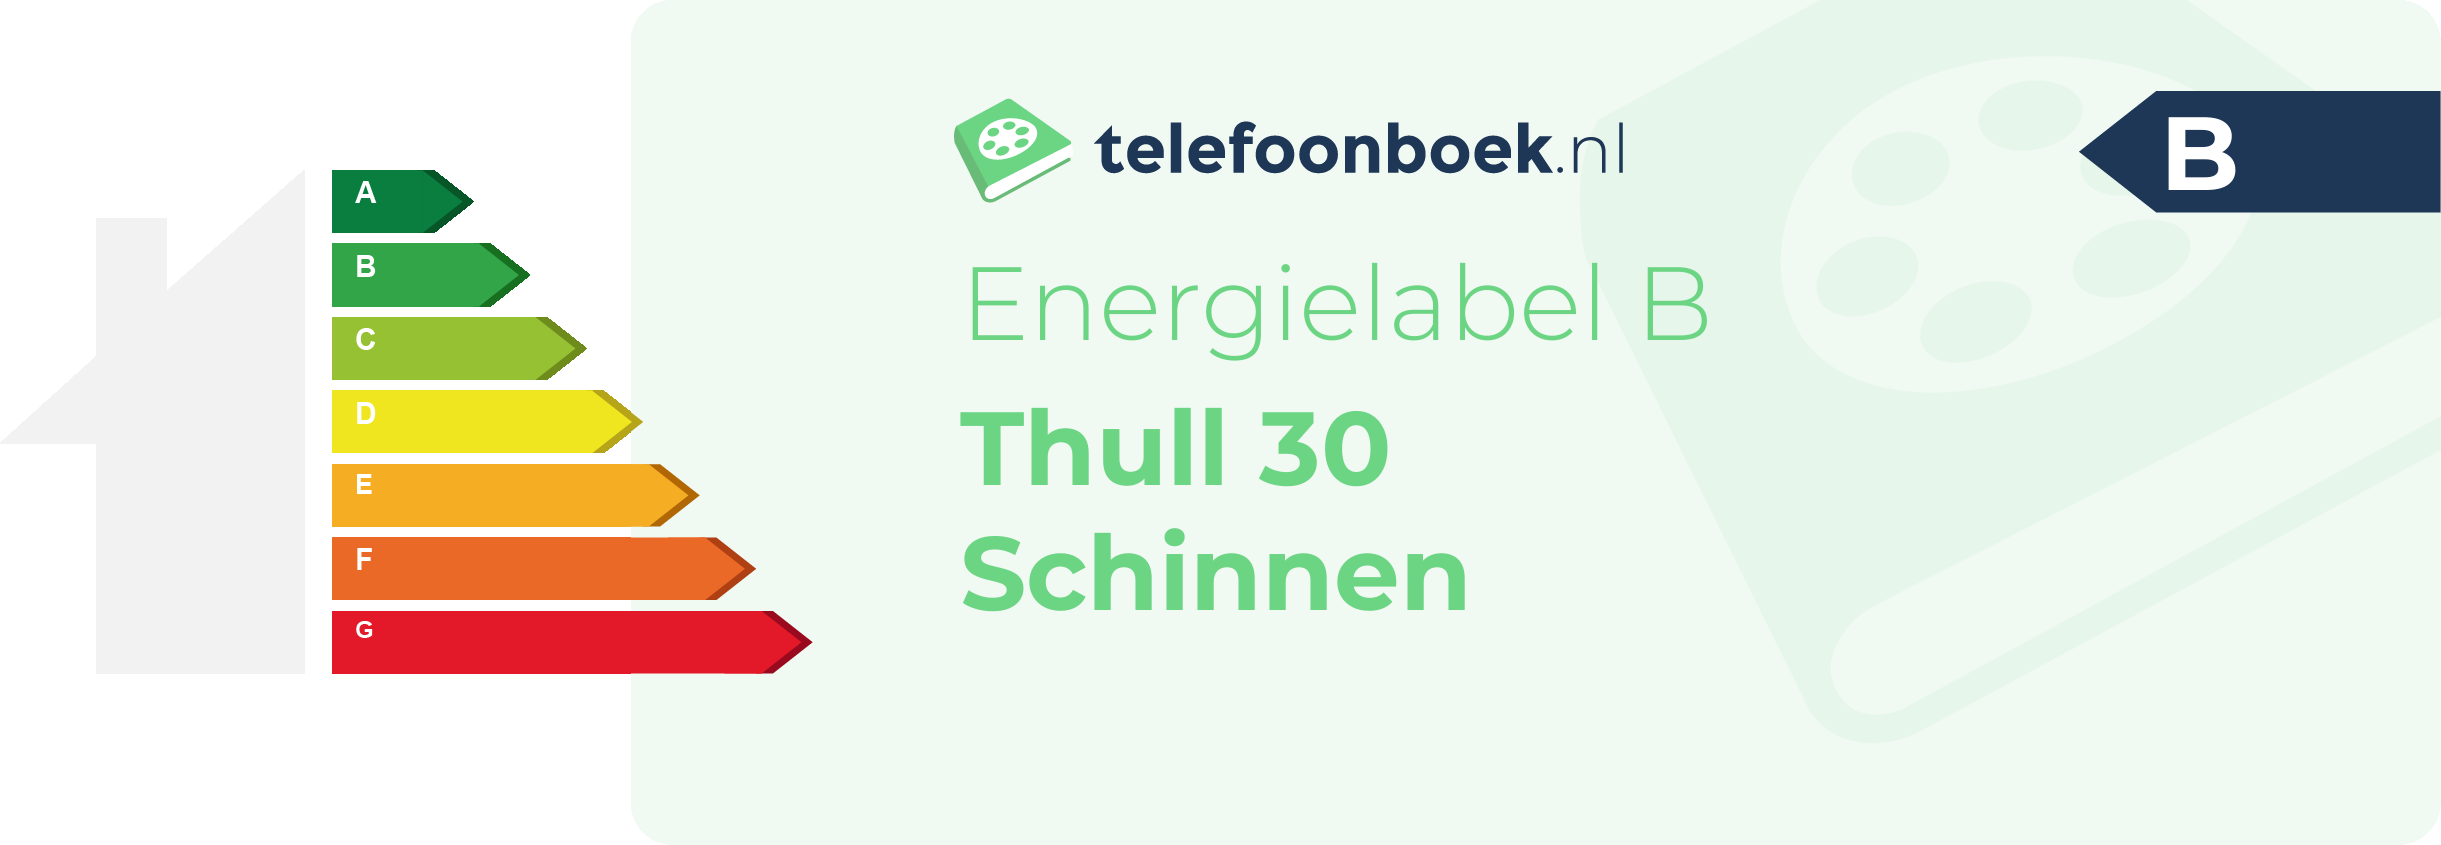 Energielabel Thull 30 Schinnen